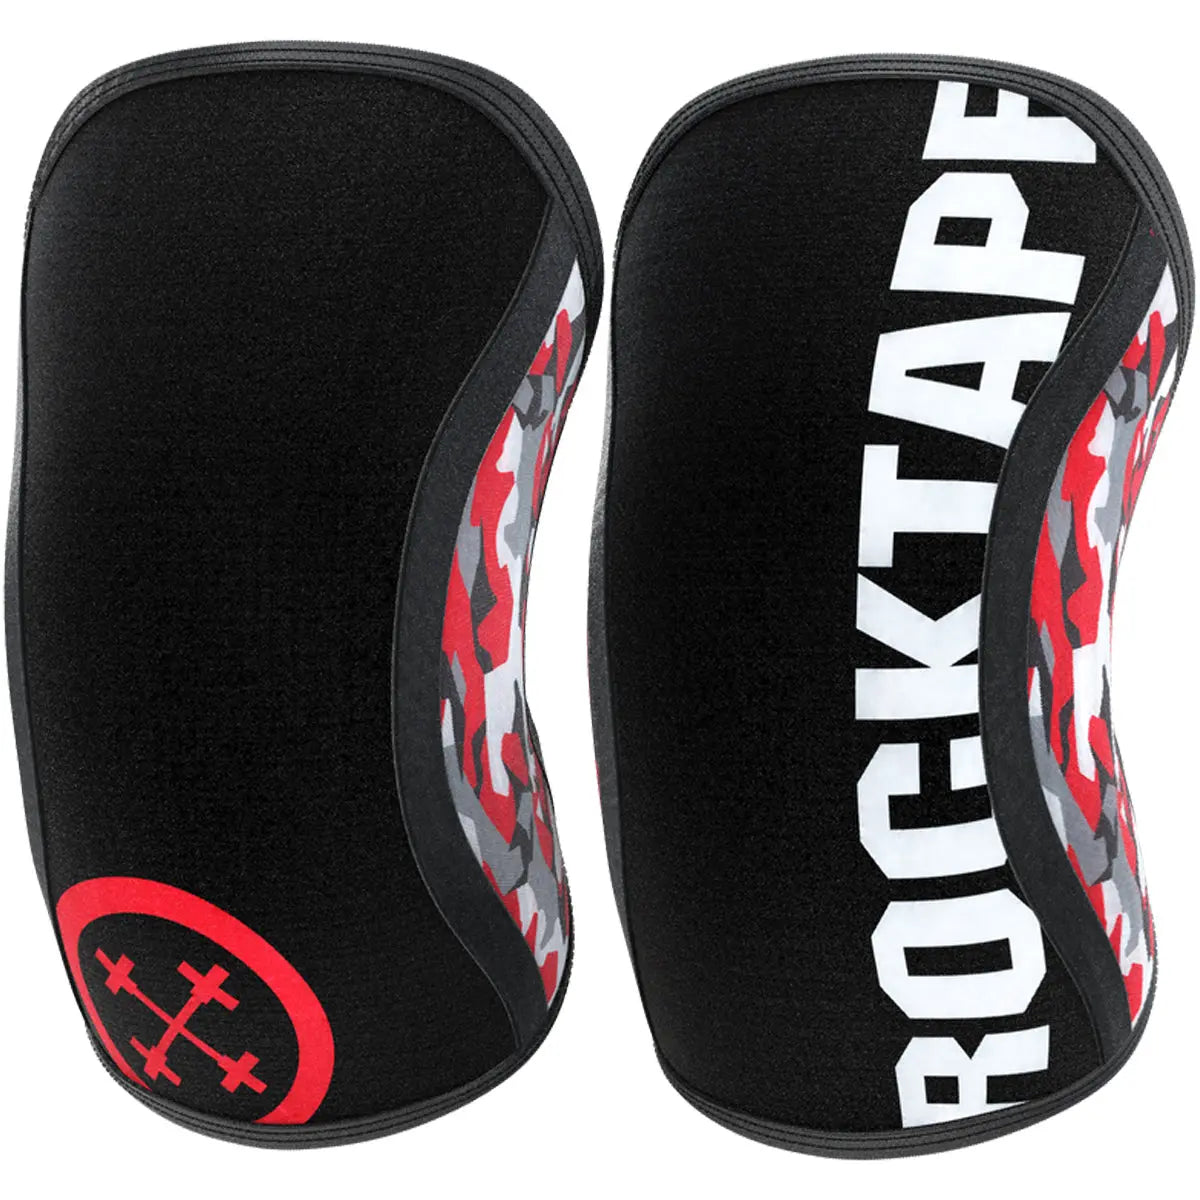 RockTape Assassins Compression Knee Support Sleeves - Red Camo RockTape